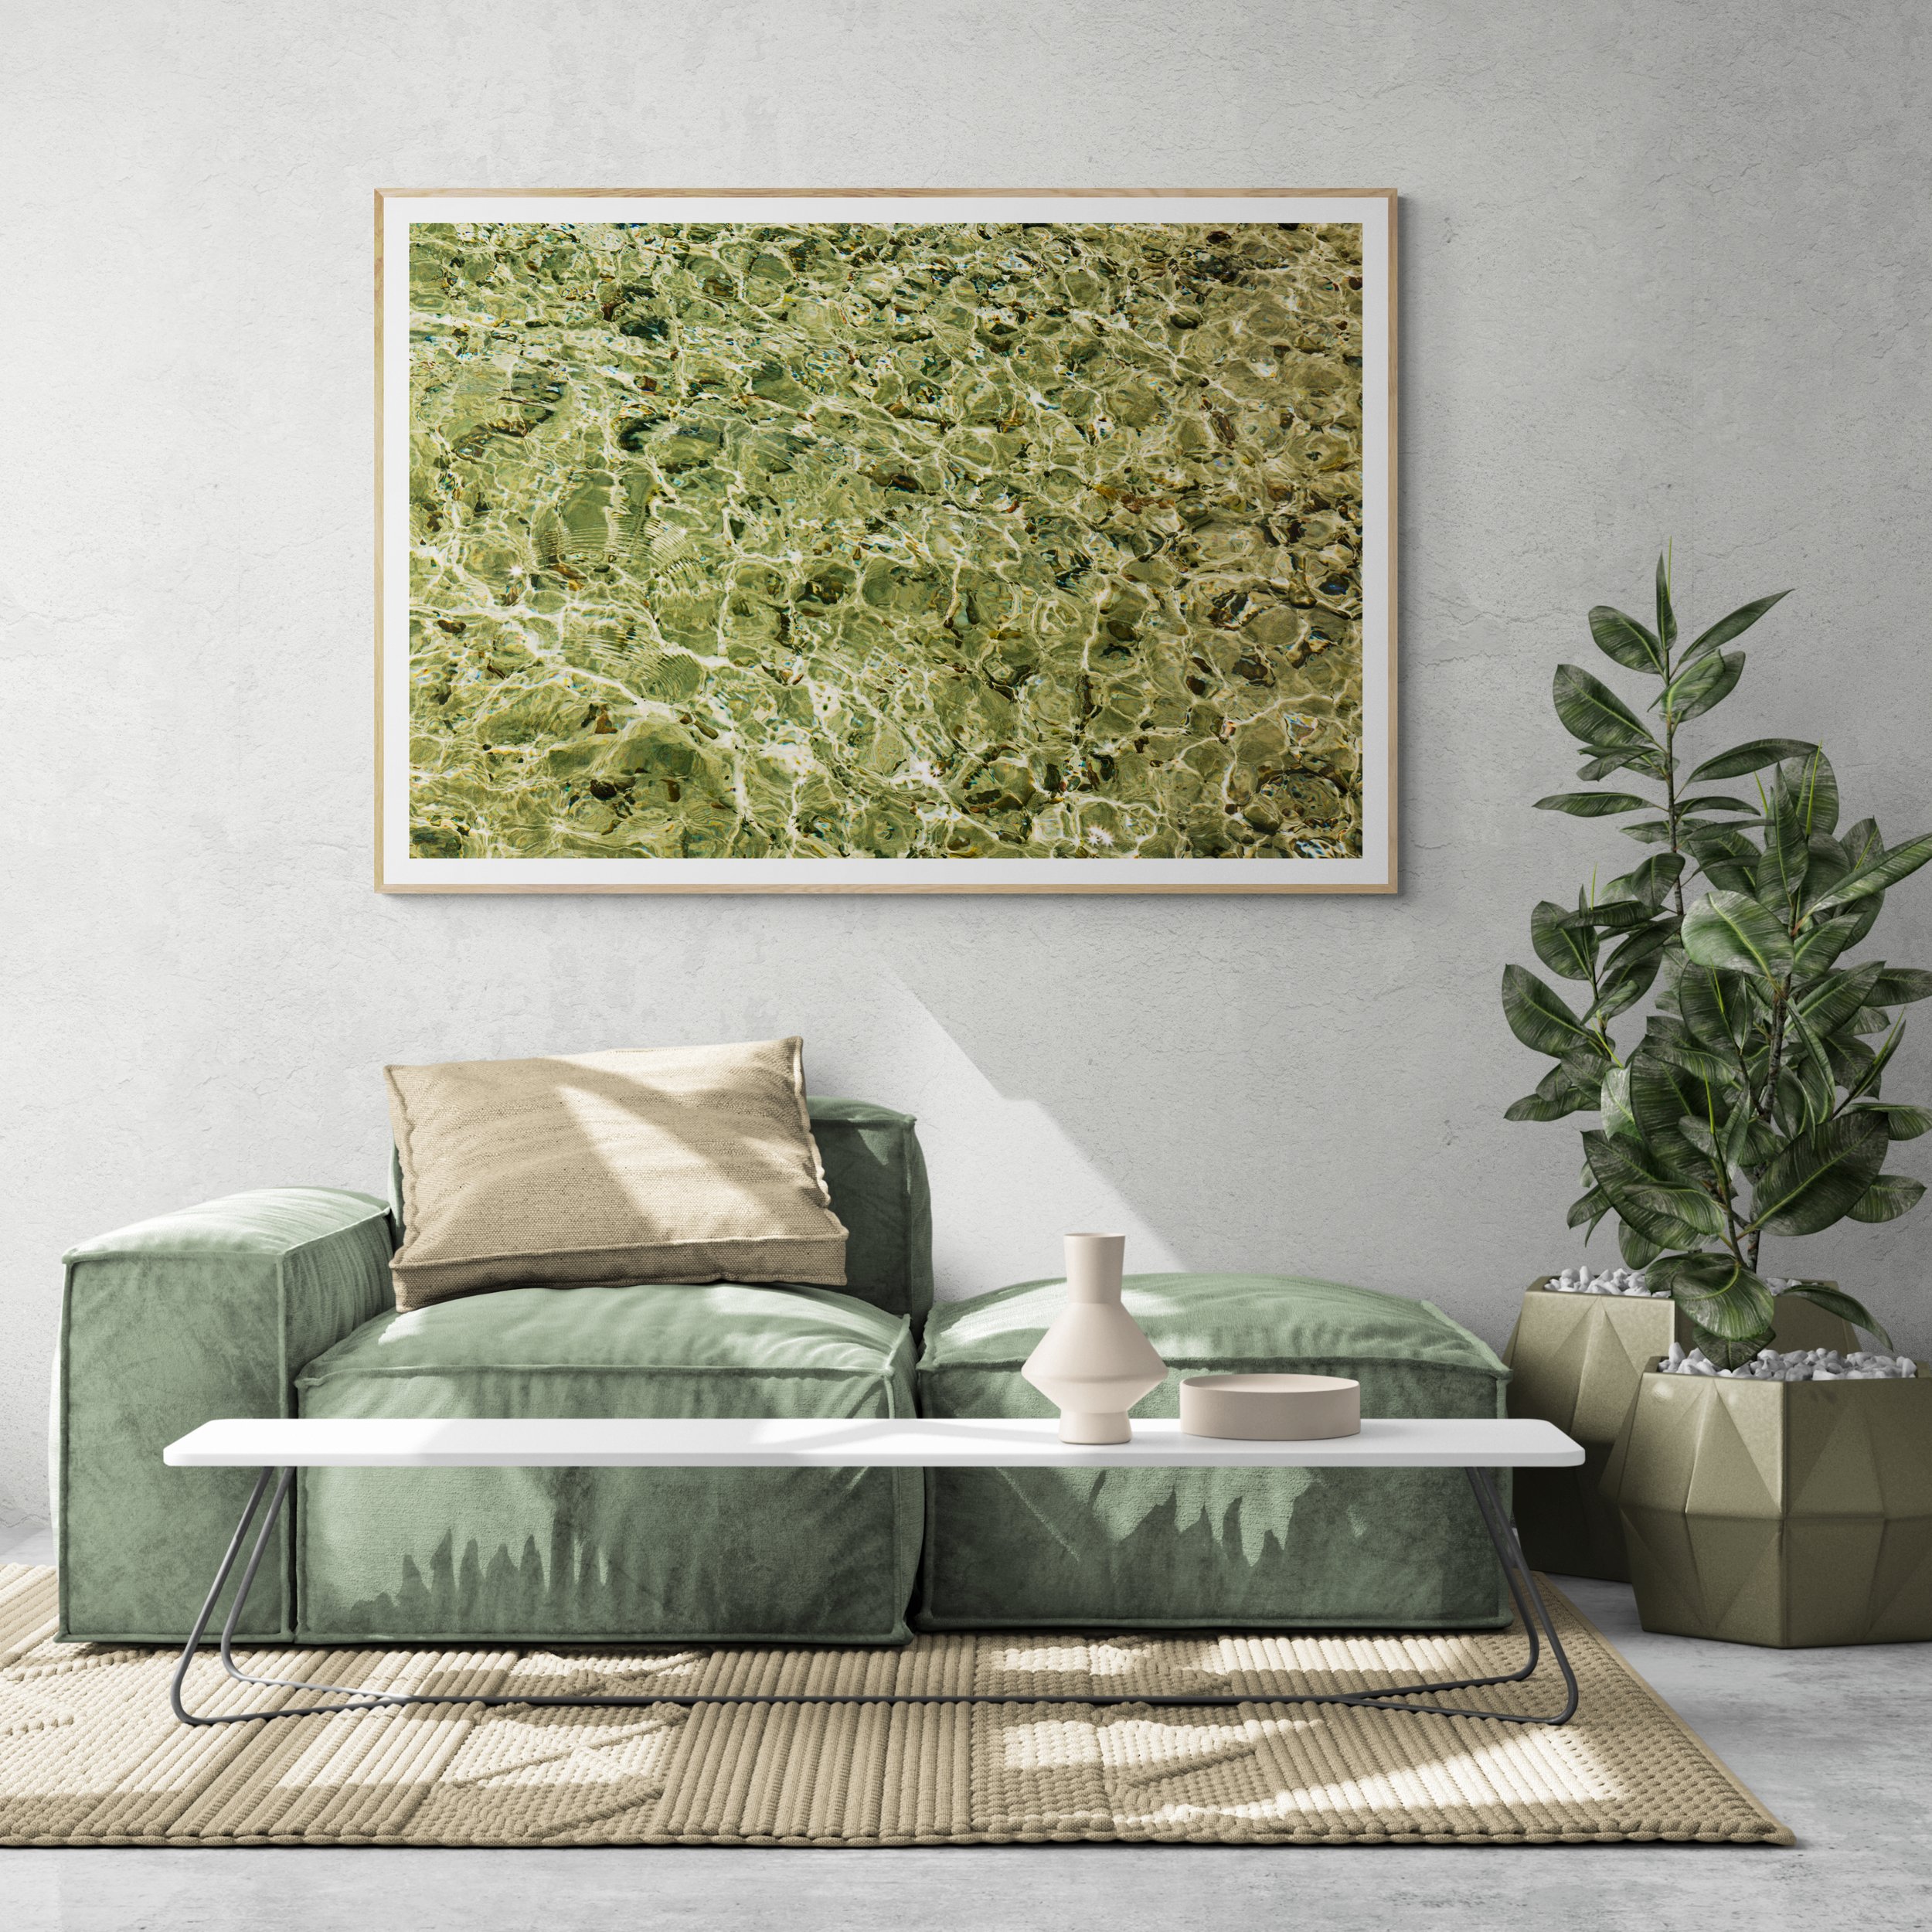 Modern_living_room_with_tropical_plants.jpg